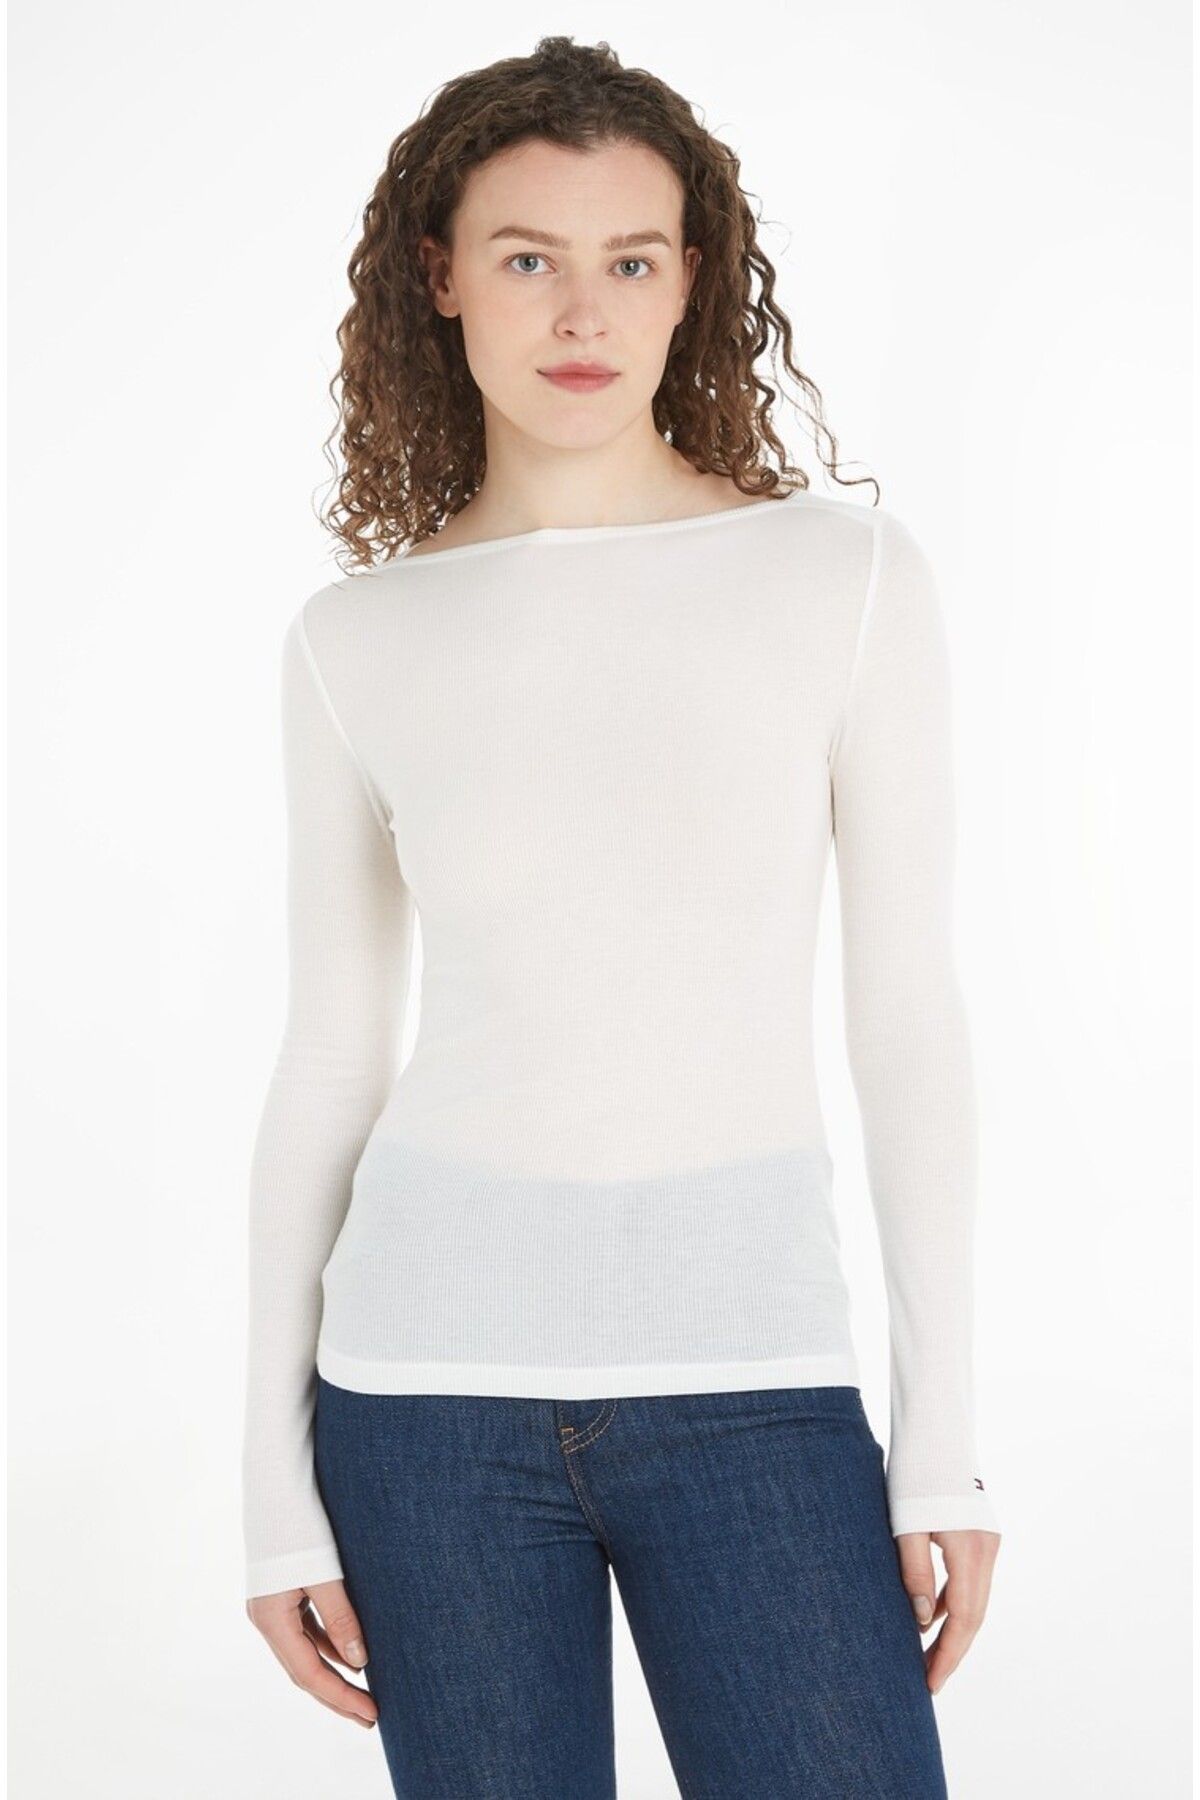 Tommy Hilfiger Kadın Marka Logolu Uzun Kollu Slim Fit Beyaz T-Shirt WW0WW39788-YBL